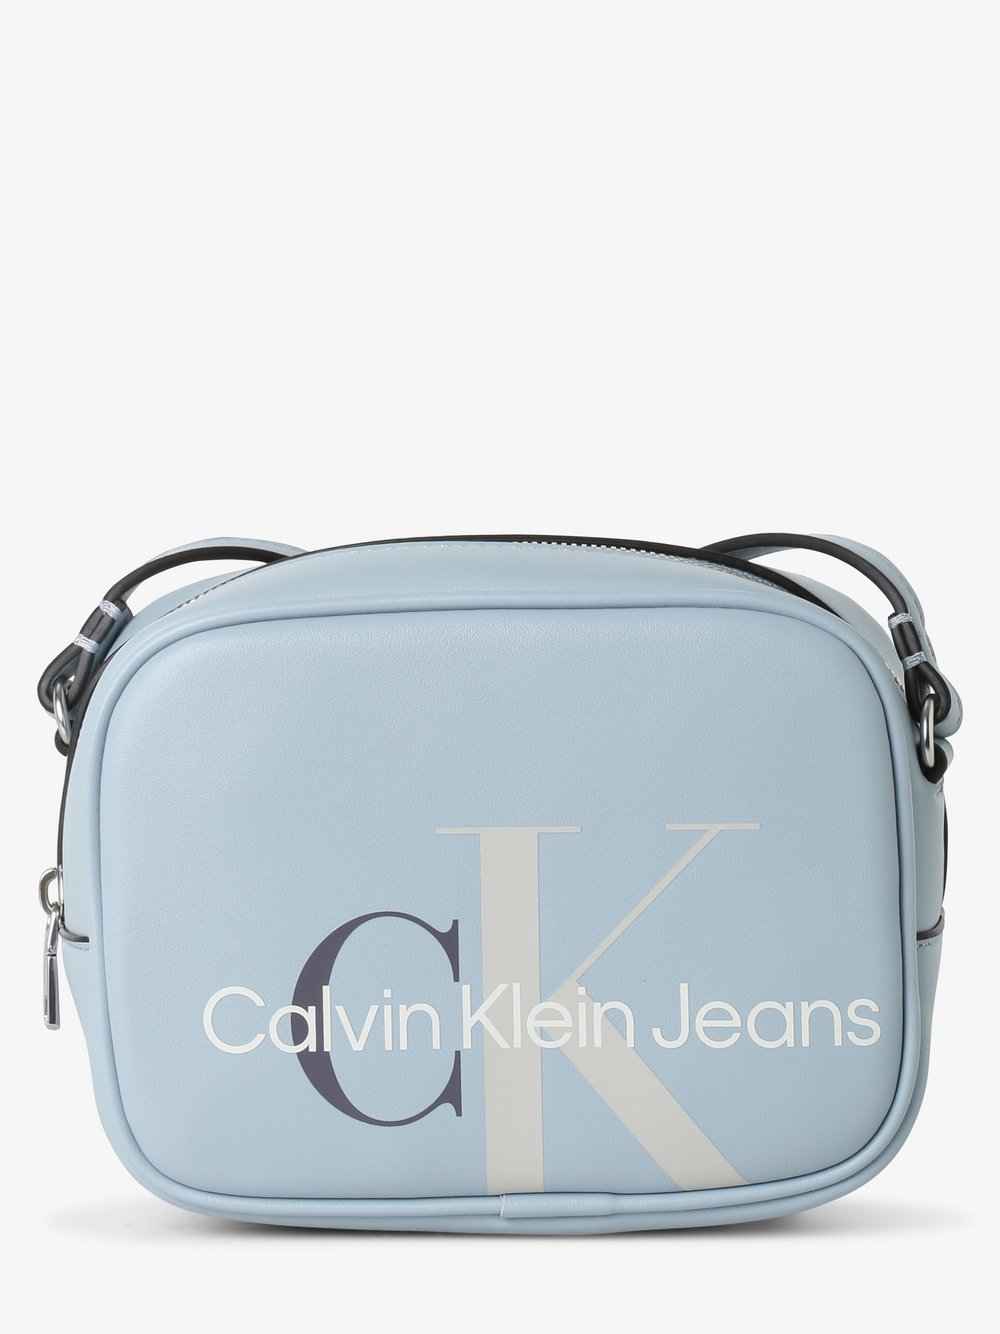 Calvin Klein Jeans - Damska torebka na ramię, niebieski